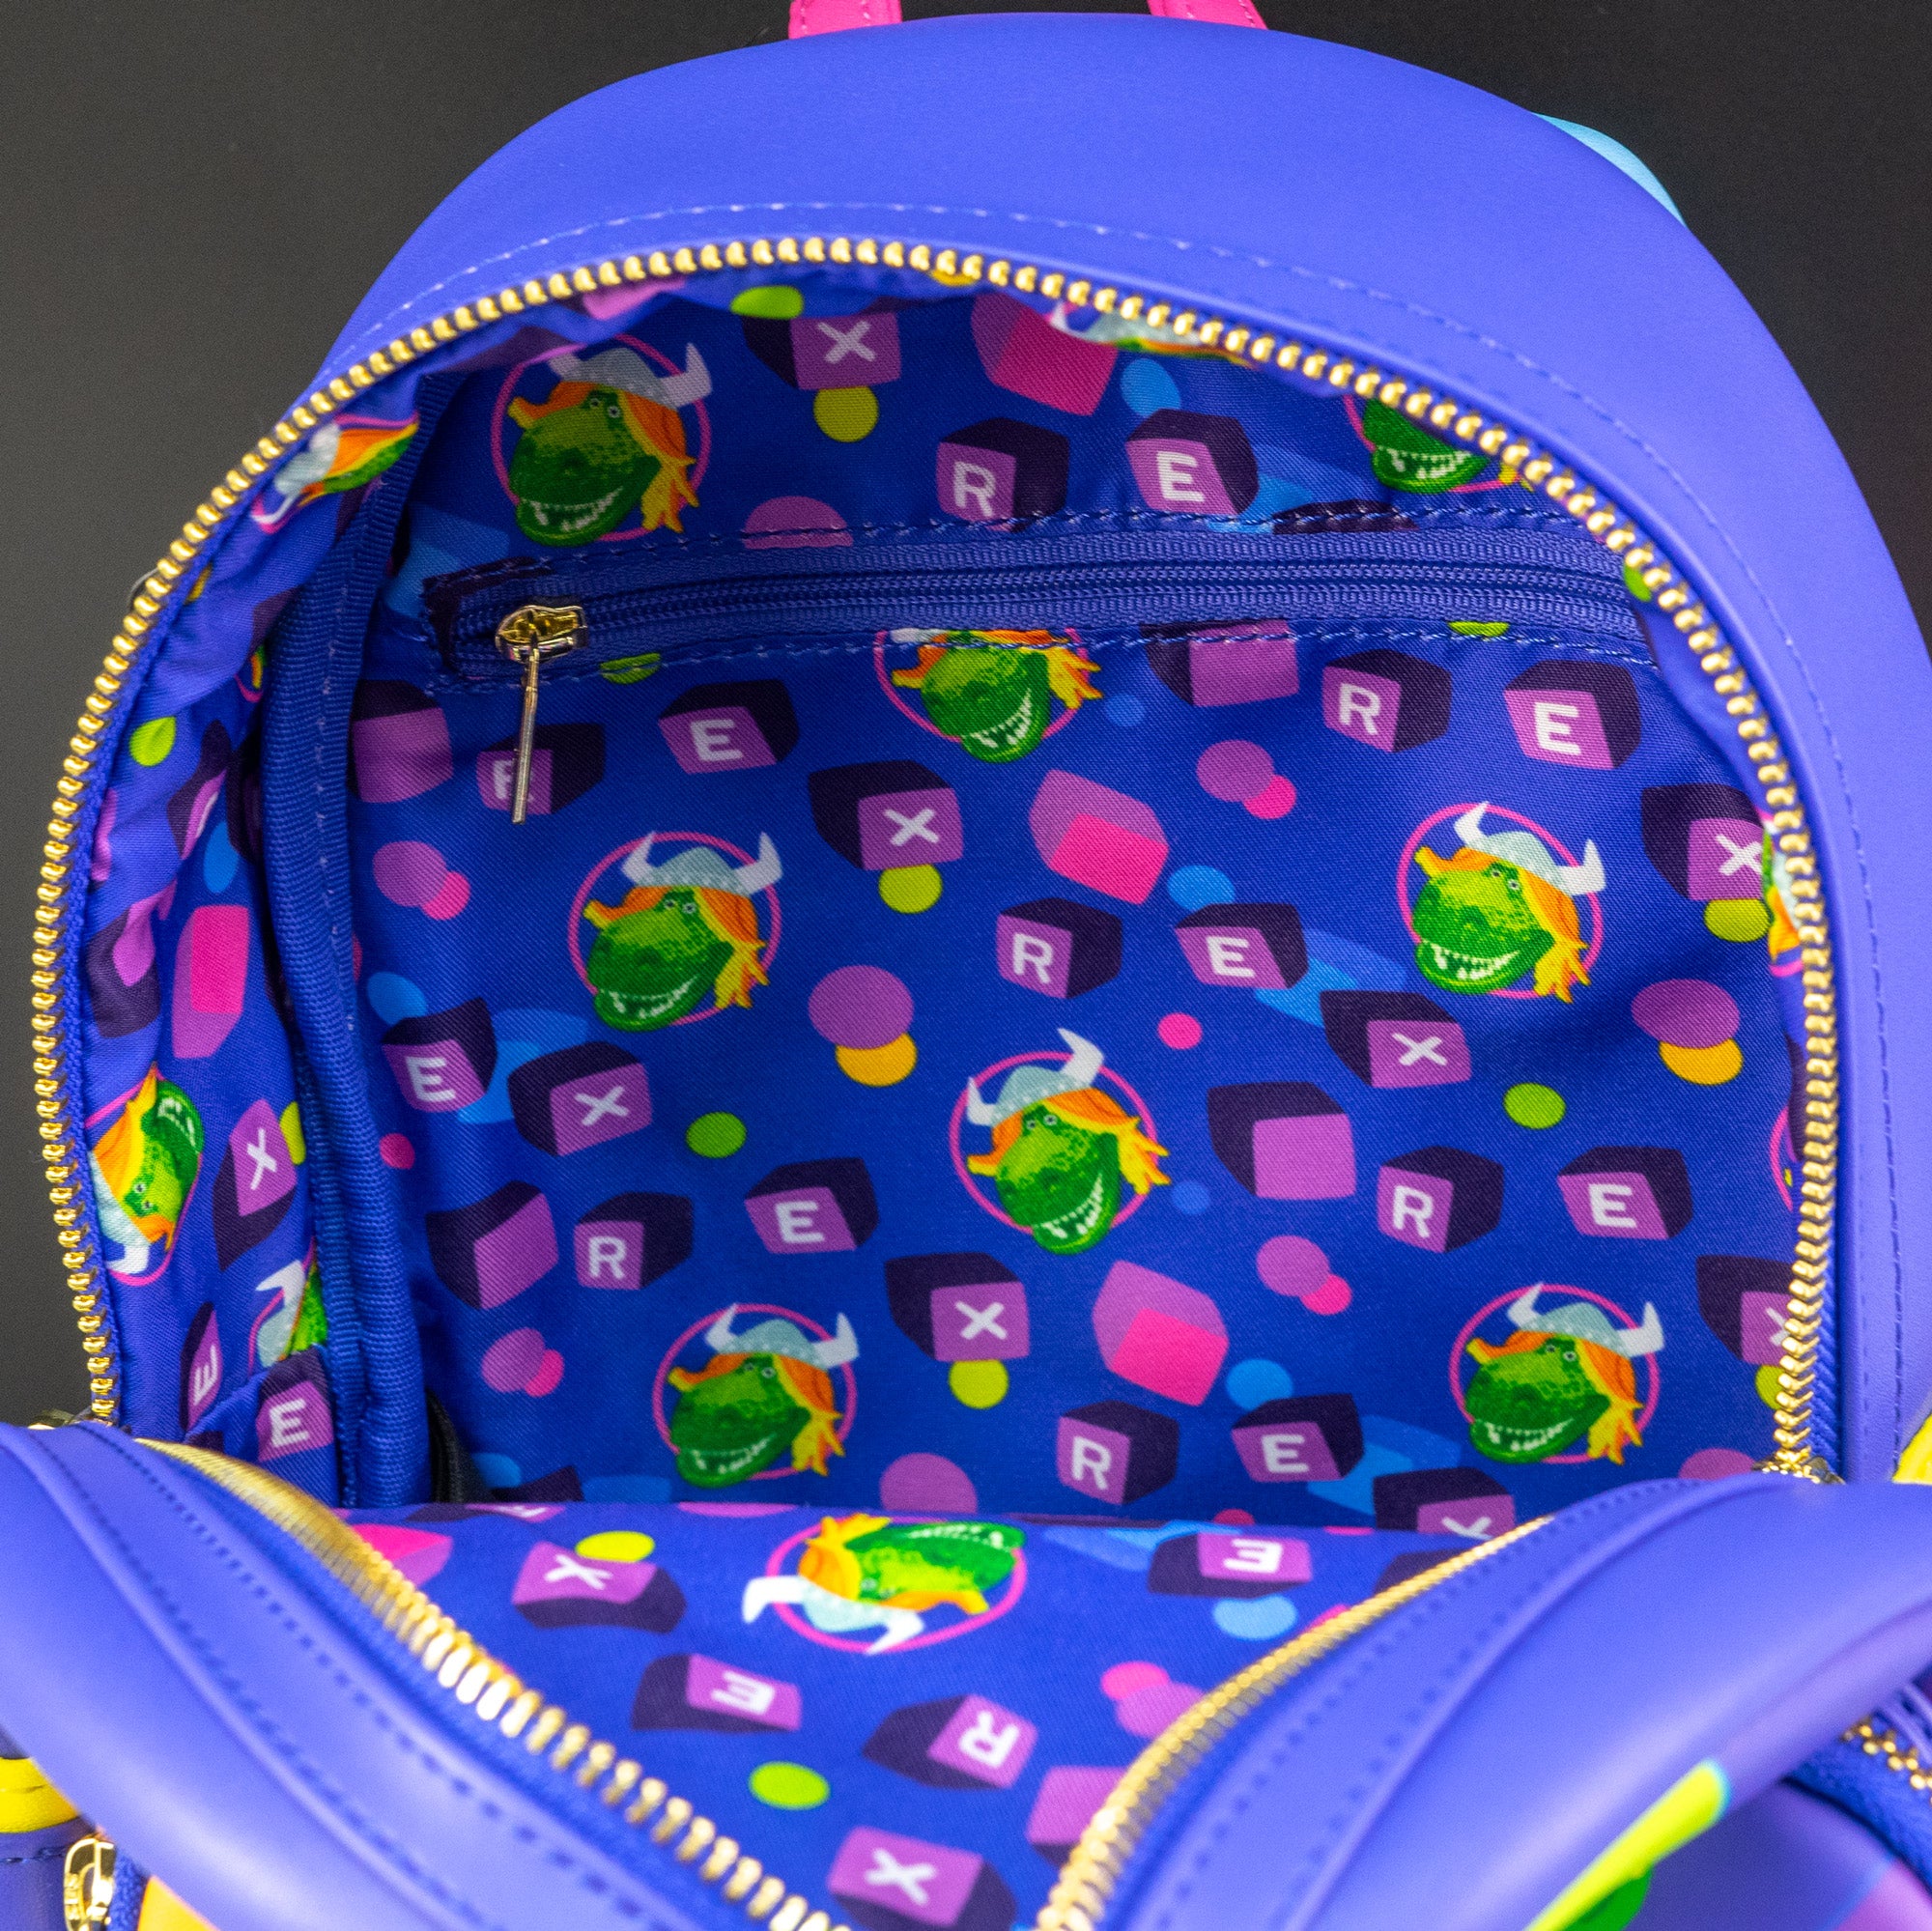 Loungefly x Disney Pixar Toy Story Partysaurus Rex Mini Backpack